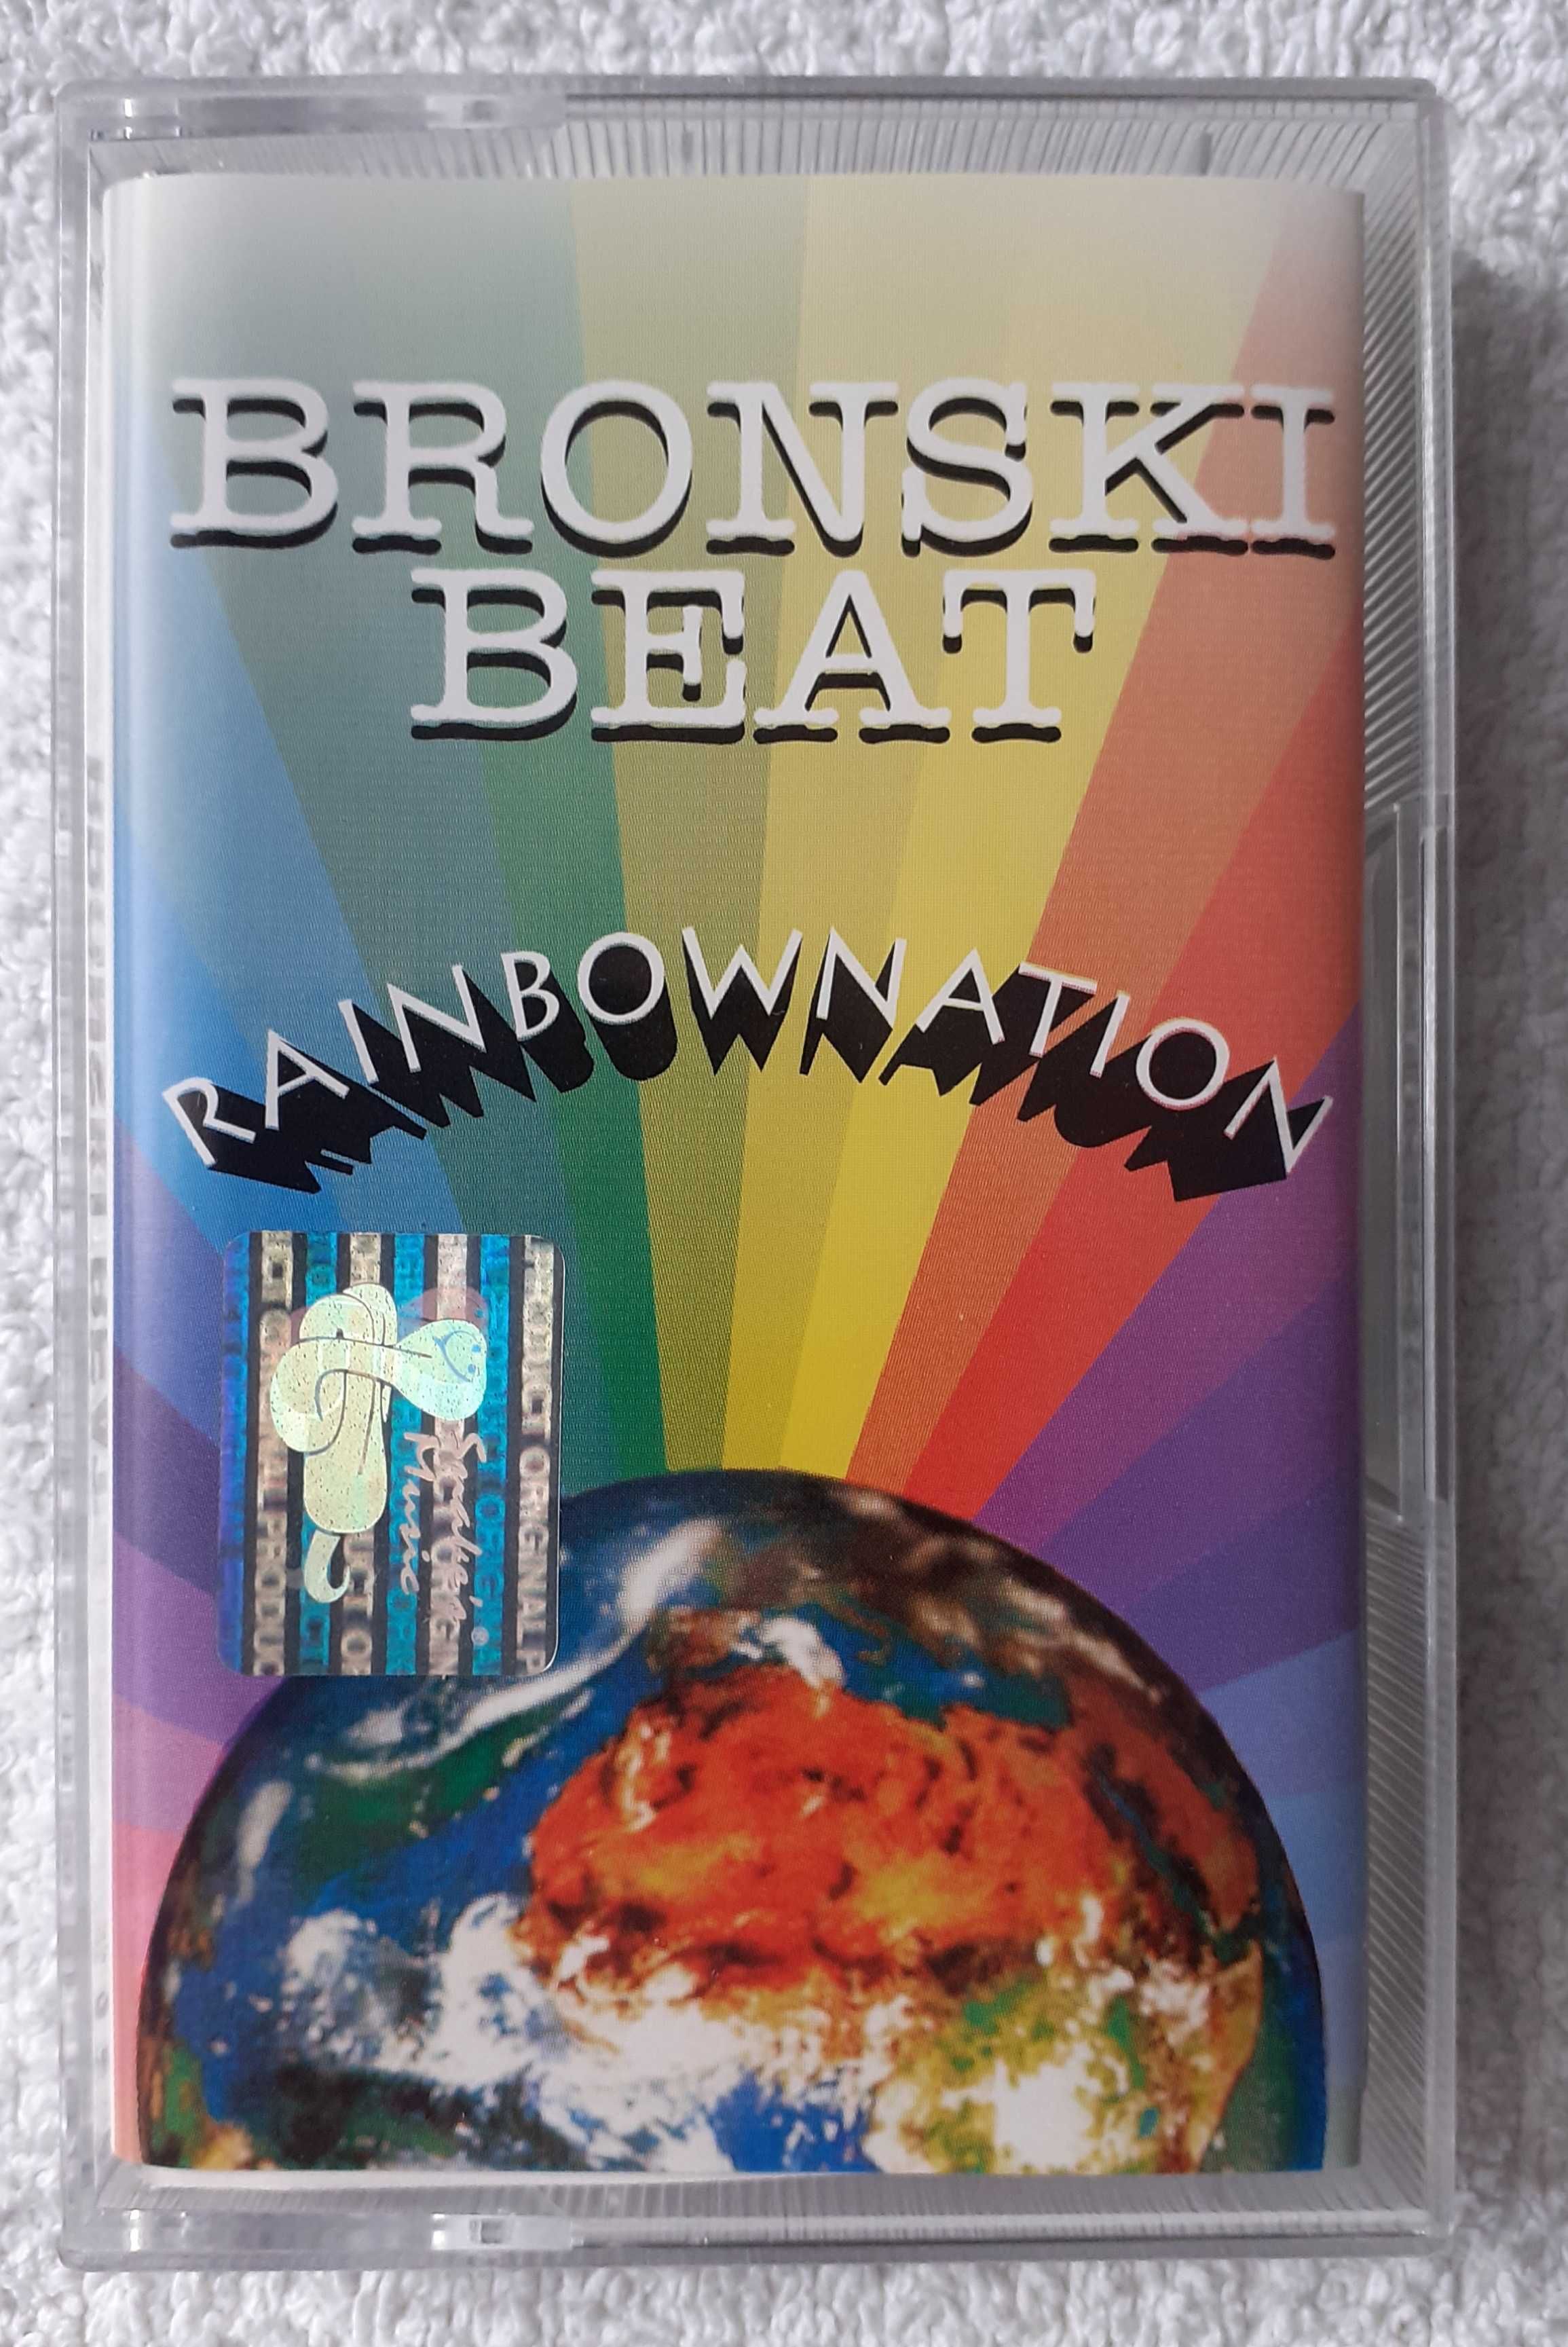 Bronski Beat – Rainbow Nation (Cassette, Album)